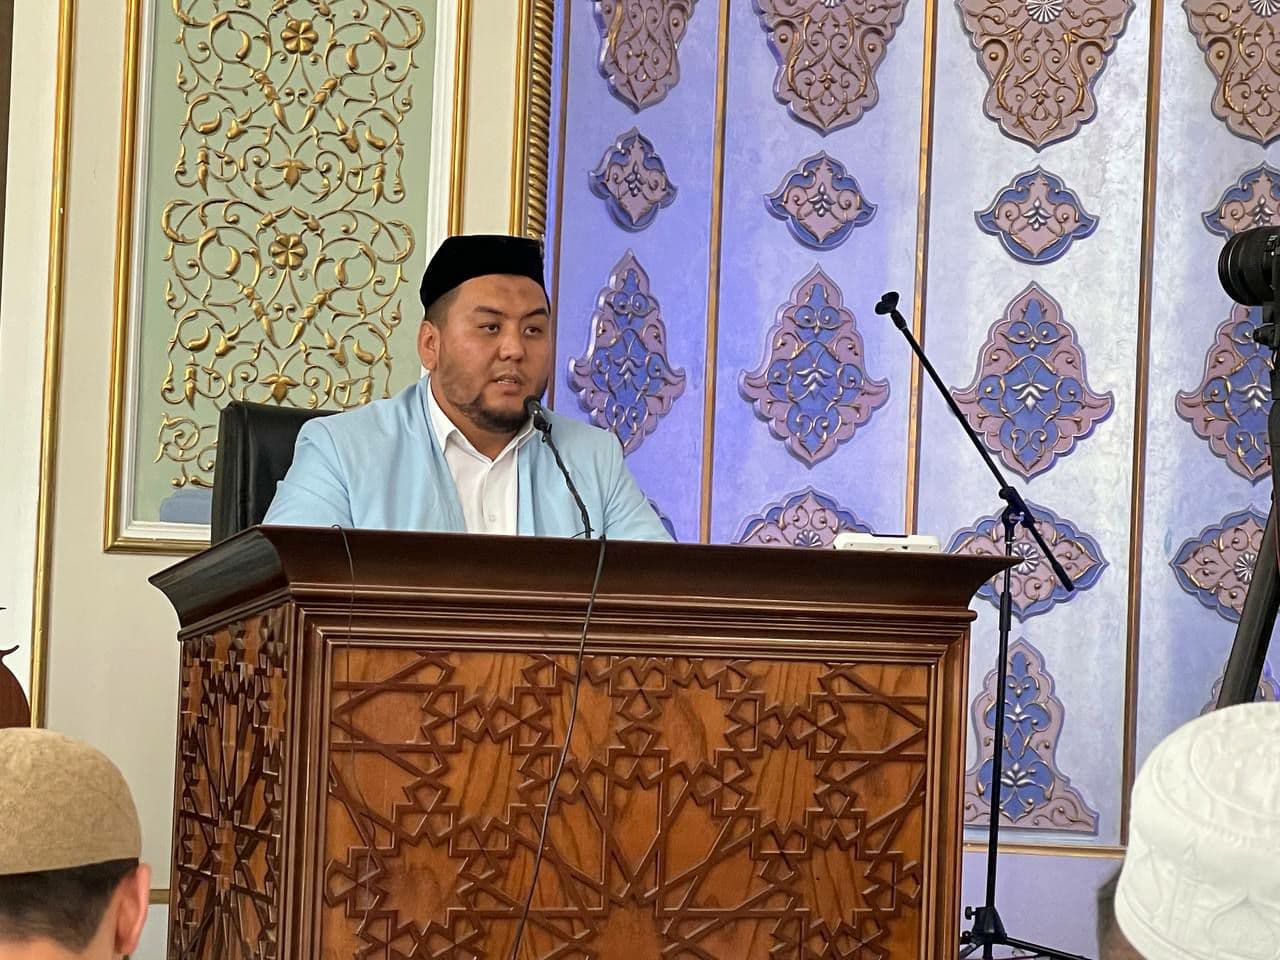 Master Yahya Ubaydullah ugli visited two mosques in the capital